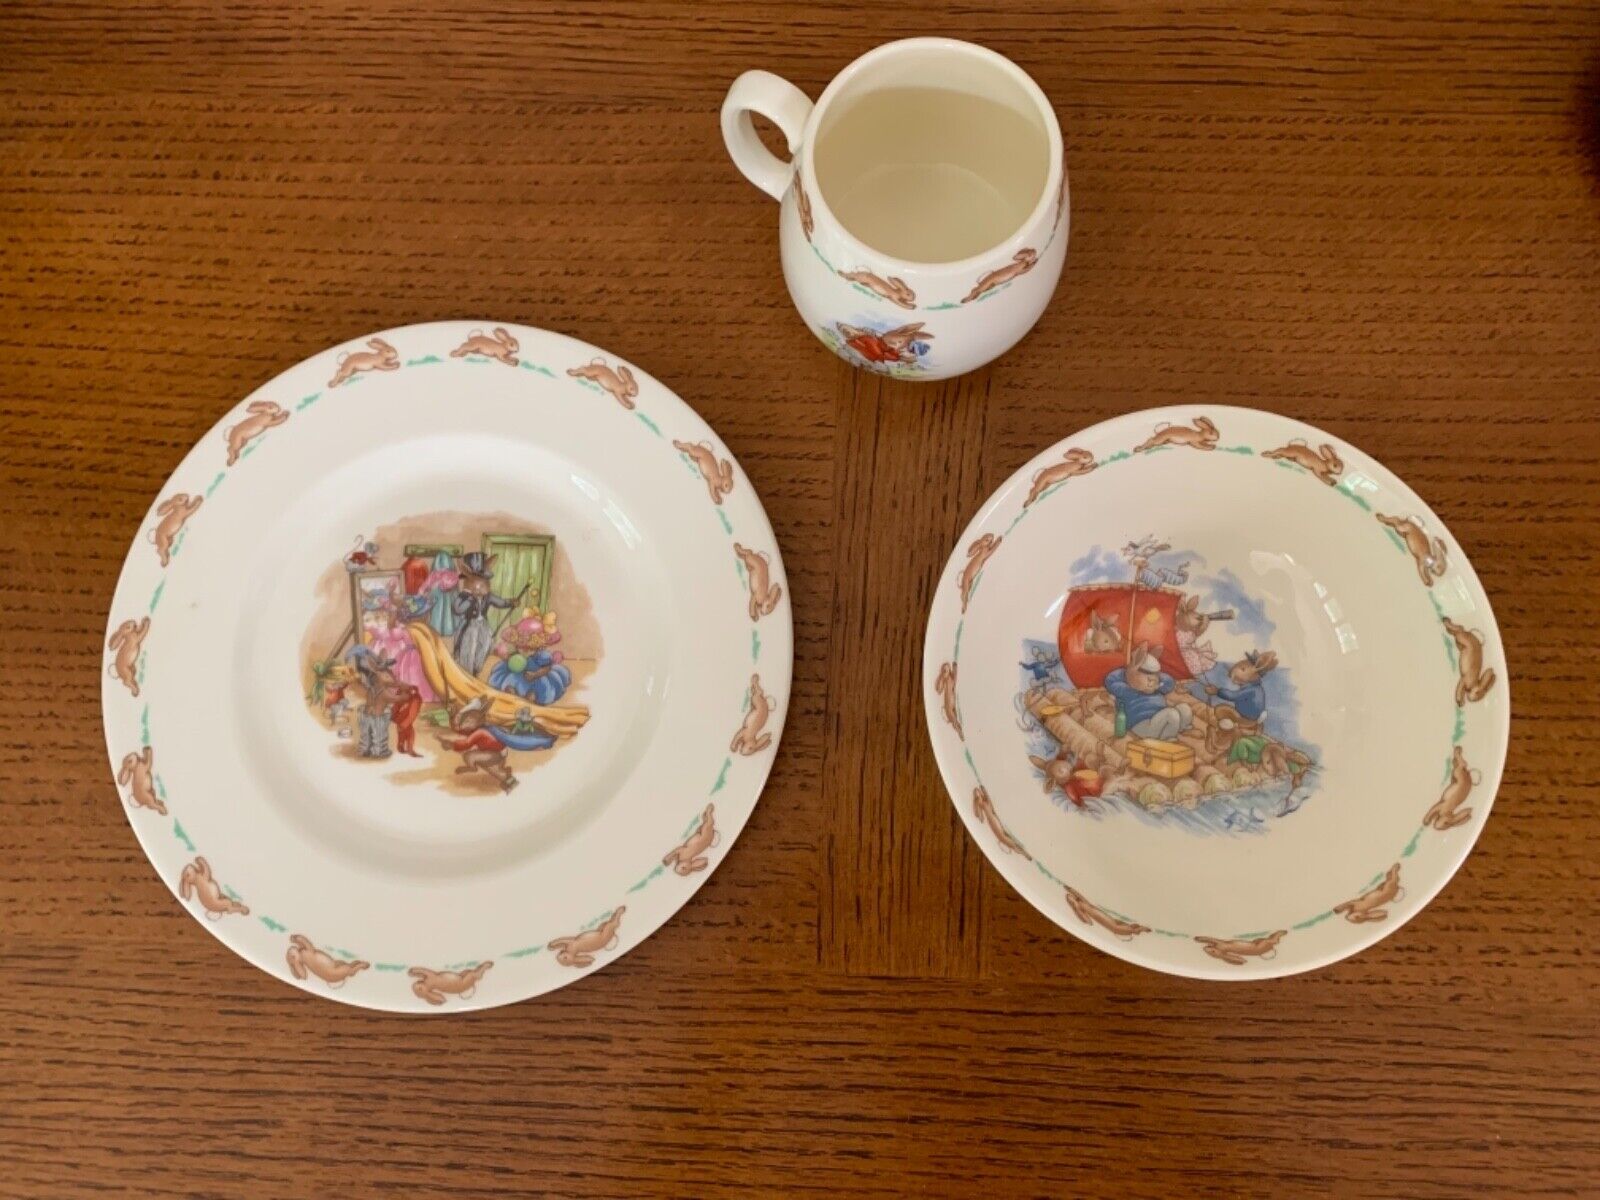 Royal Doulton Bunnykins Children’s Set Three Piece Cereal Bowl, Mug, and Plate